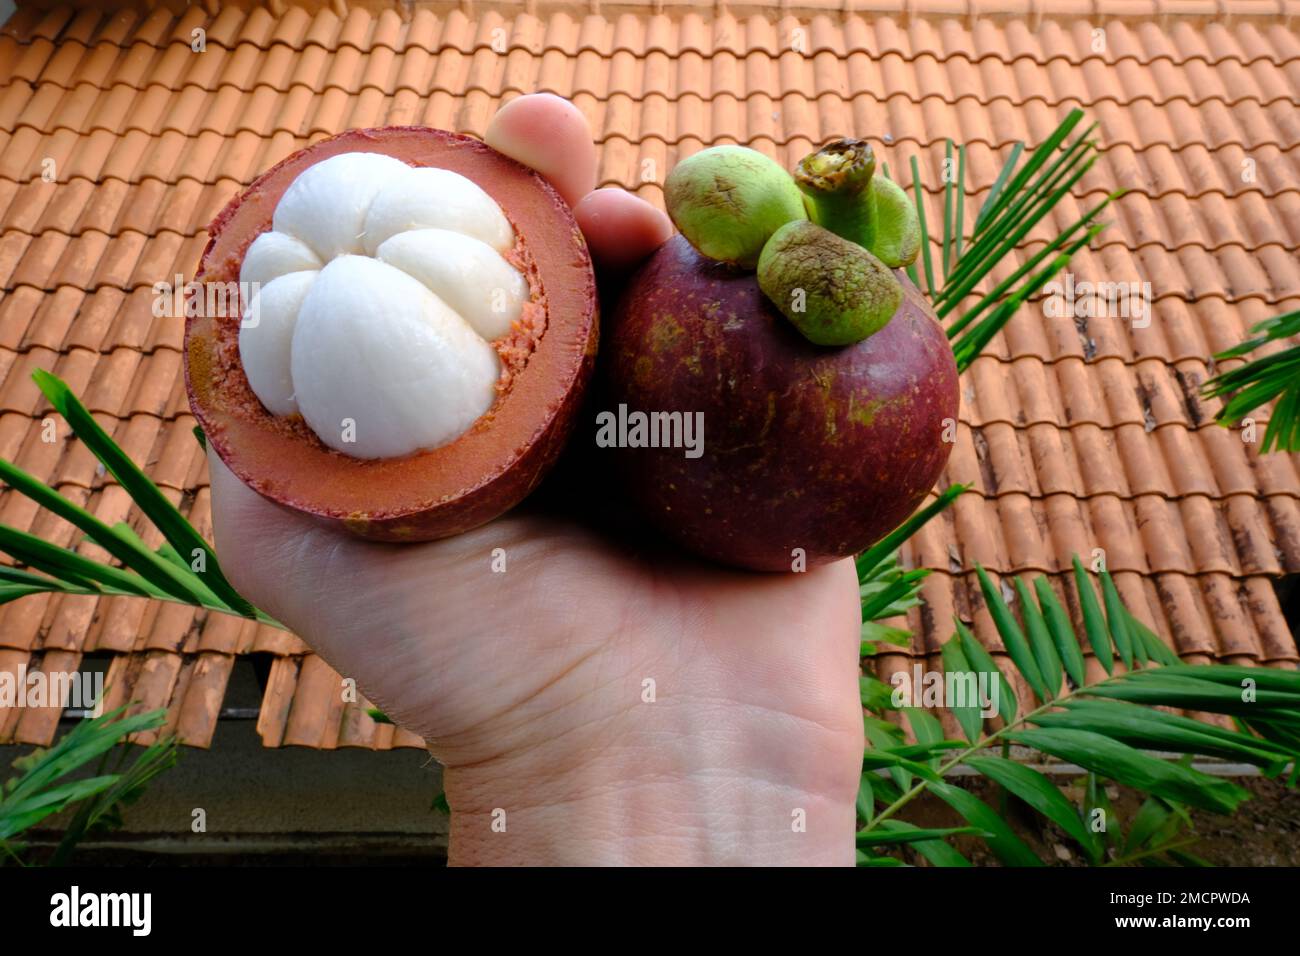 Indonesia Batam - Mangosteen - Garcinia mangostana Stock Photo